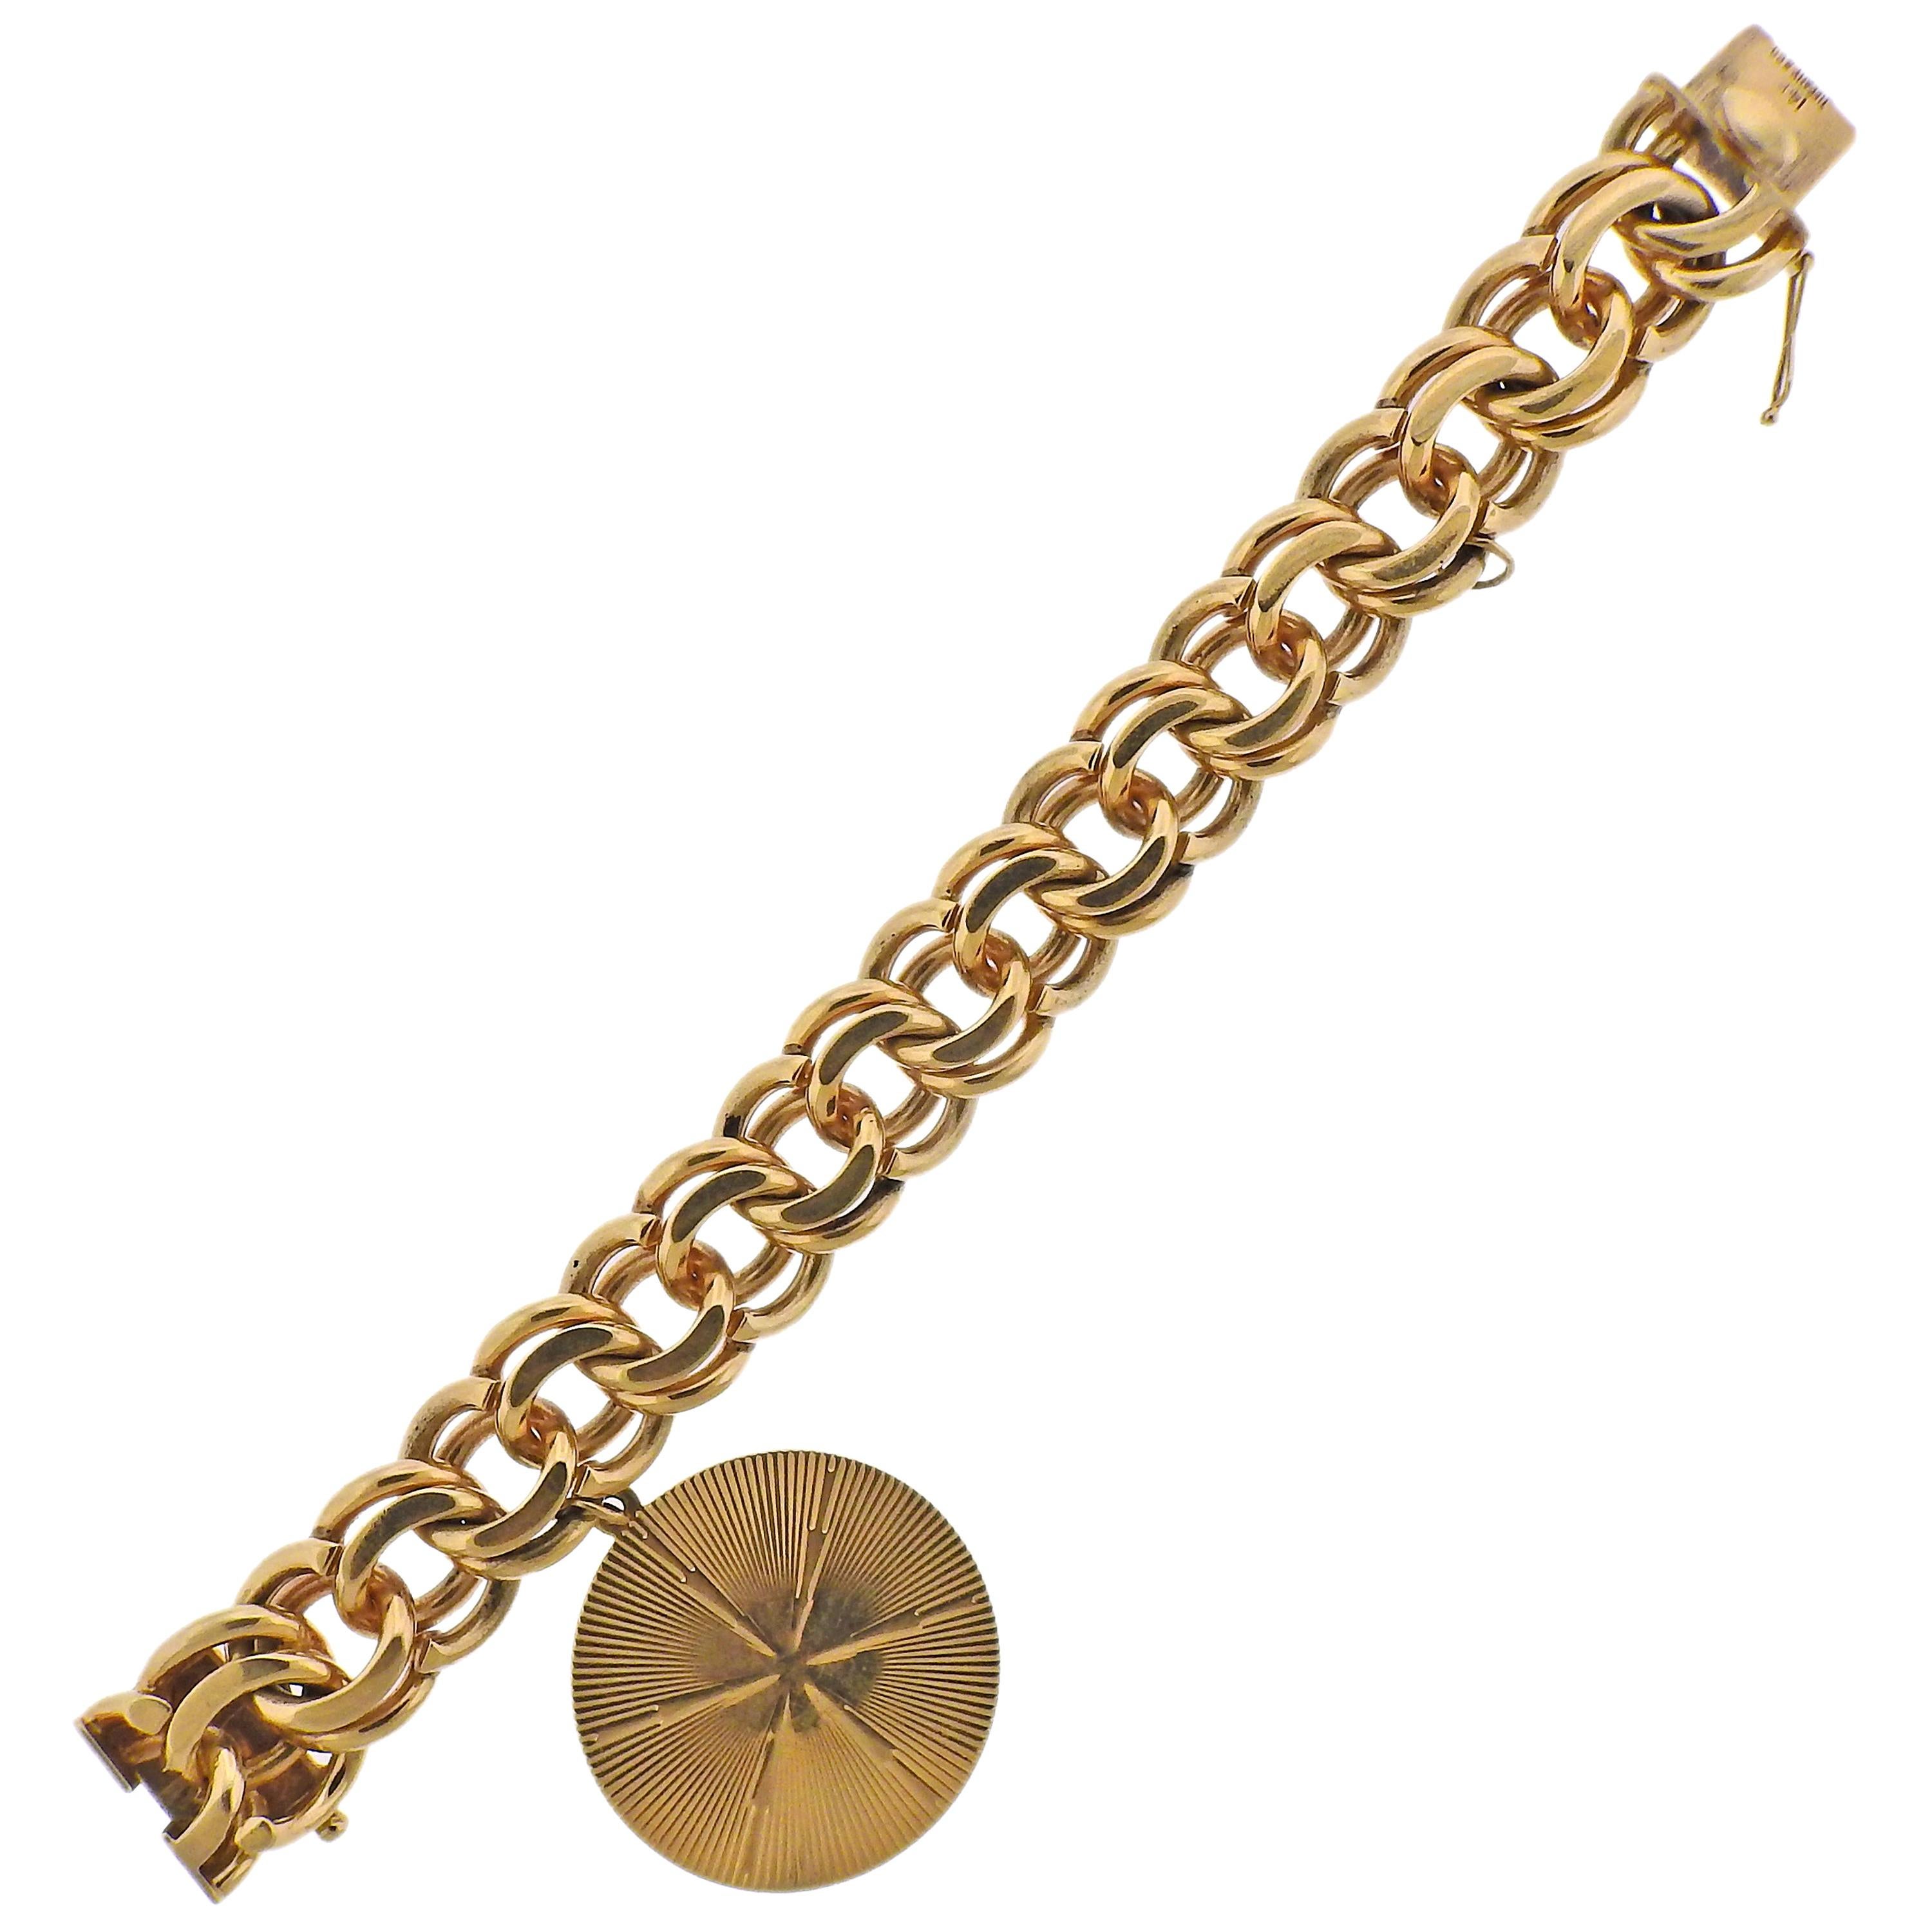 Midcentury Tiffany & Co. Charm Bracelet